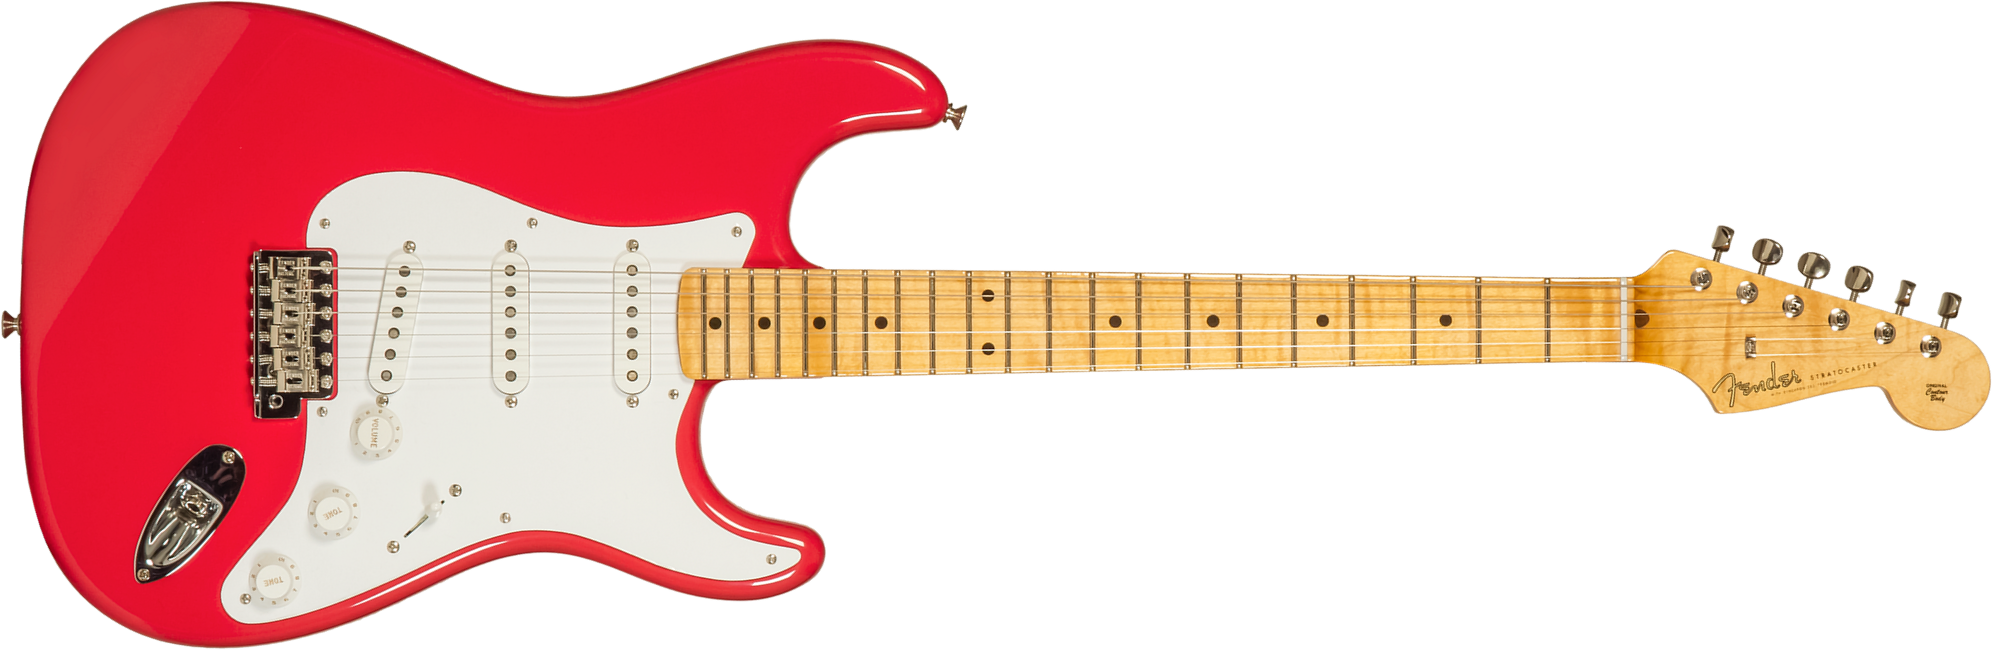 Fender Custom Shop Strat 1956 3s Trem Mn #r133022 - Nos Fiesta Red - Guitarra eléctrica con forma de str. - Main picture